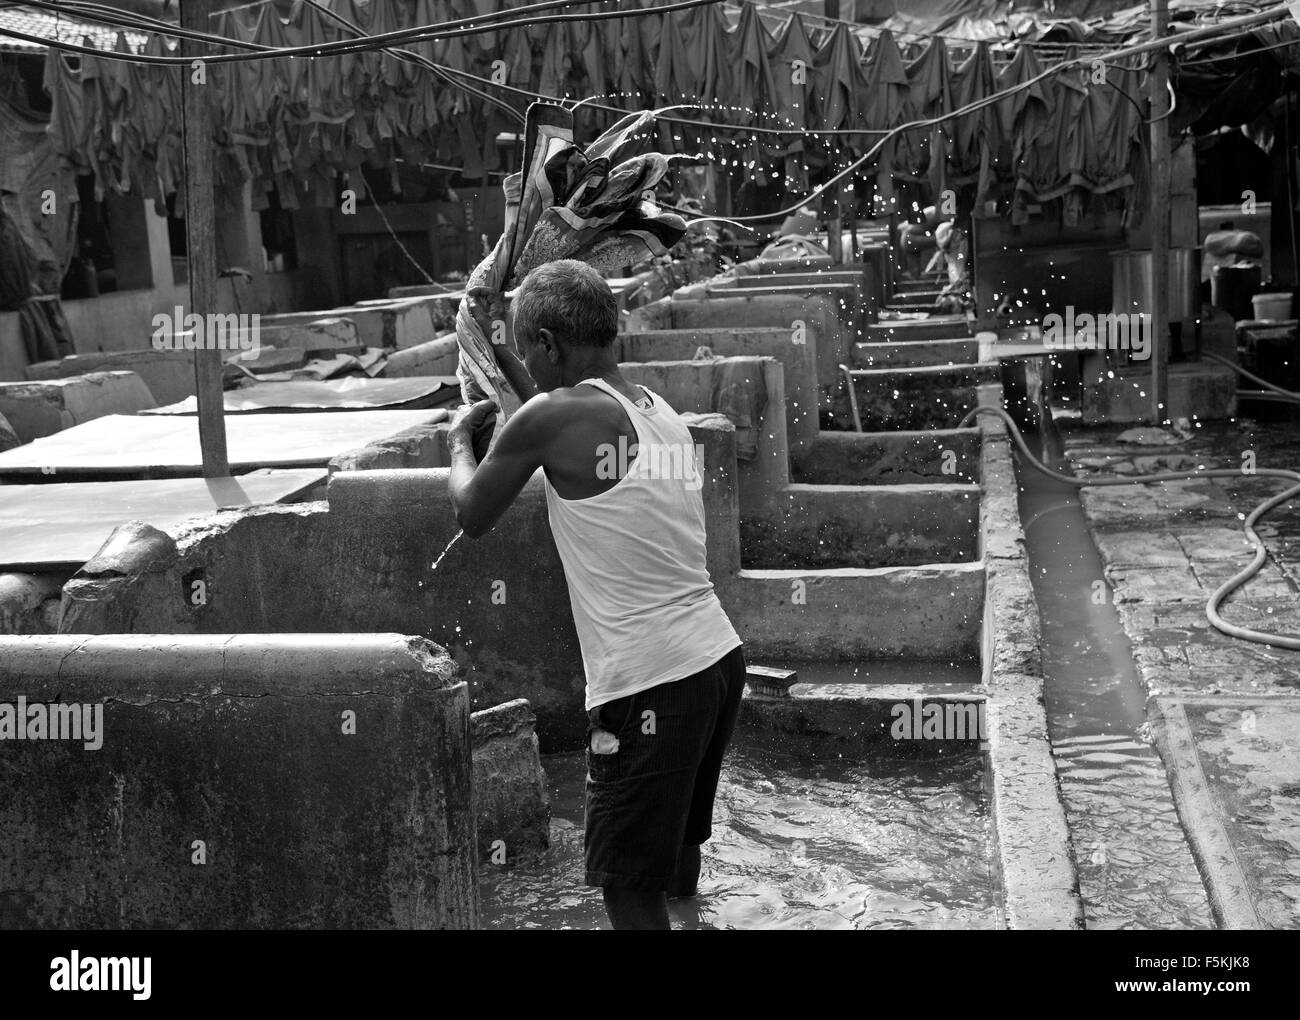 The image of Washerman shot at Dhobi Gaht in Mumbai, India Stock Photo